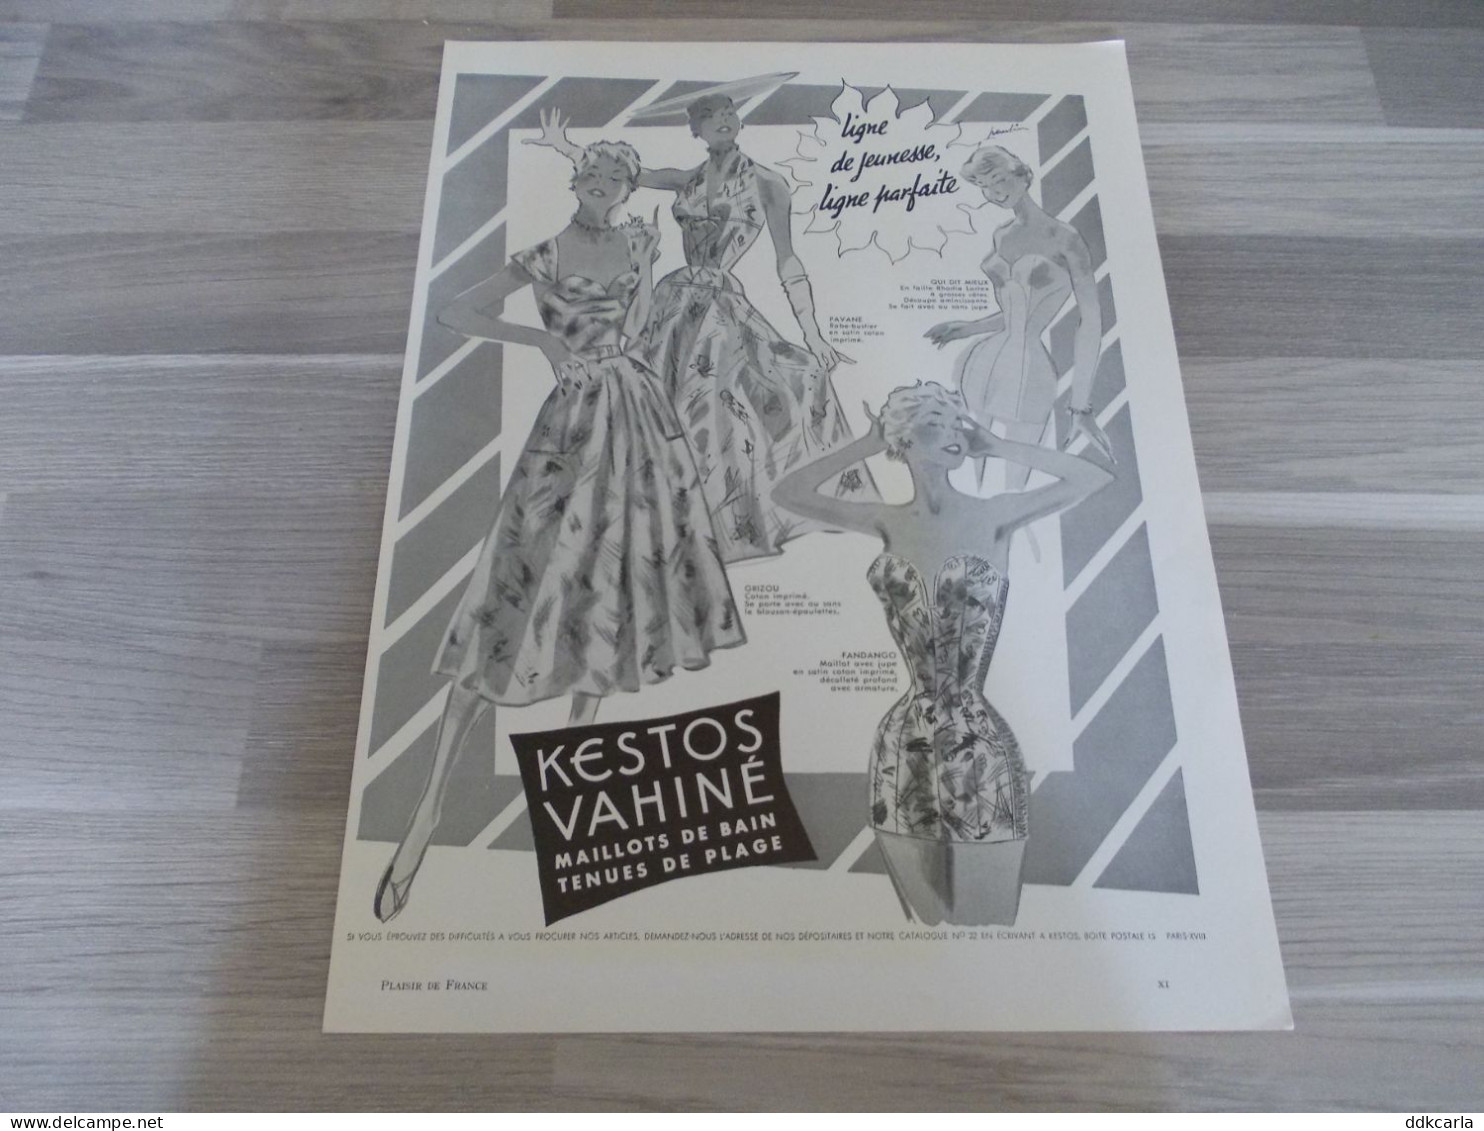 Reclame Advertentie Uit Oud Tijdschrift 1955 - Kestos - Vahiné - Maillots De Bain Et Tenues De Plage - Publicidad